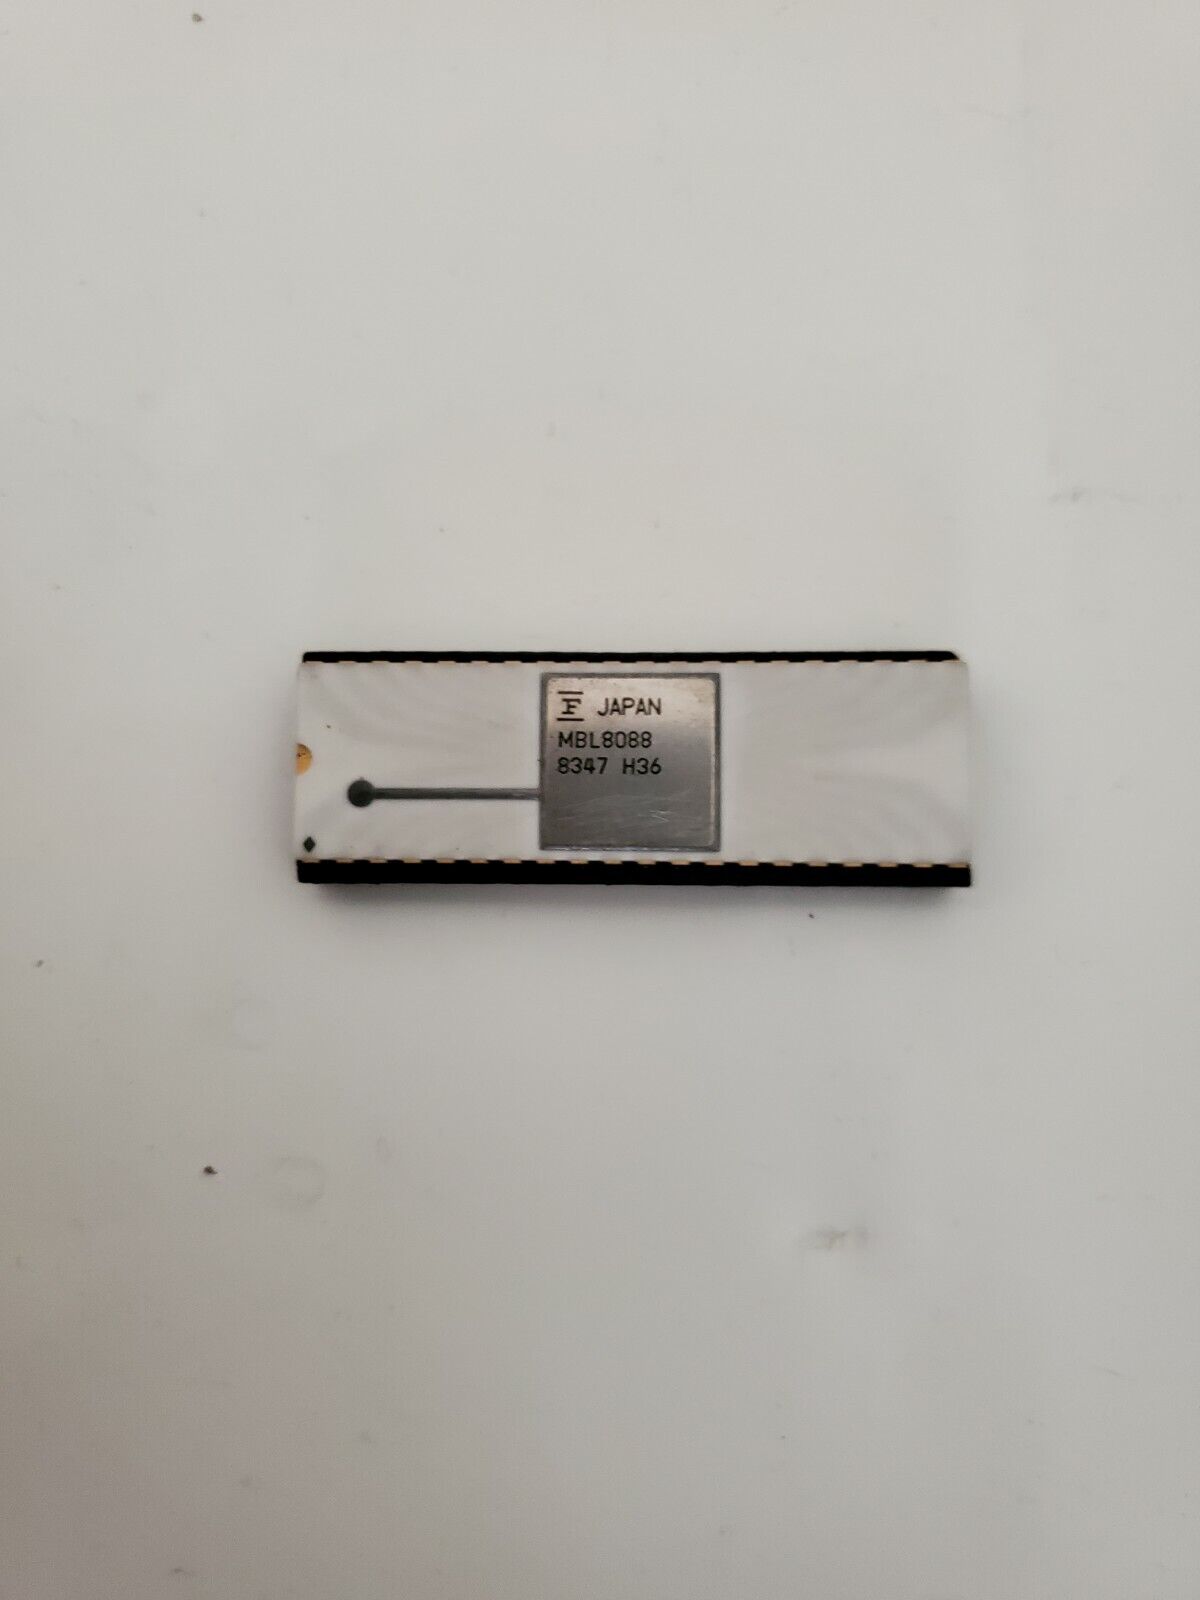 Vintage Rare MBL 8088 FUJITSU White CERAMIC GOLD PLATED CPU